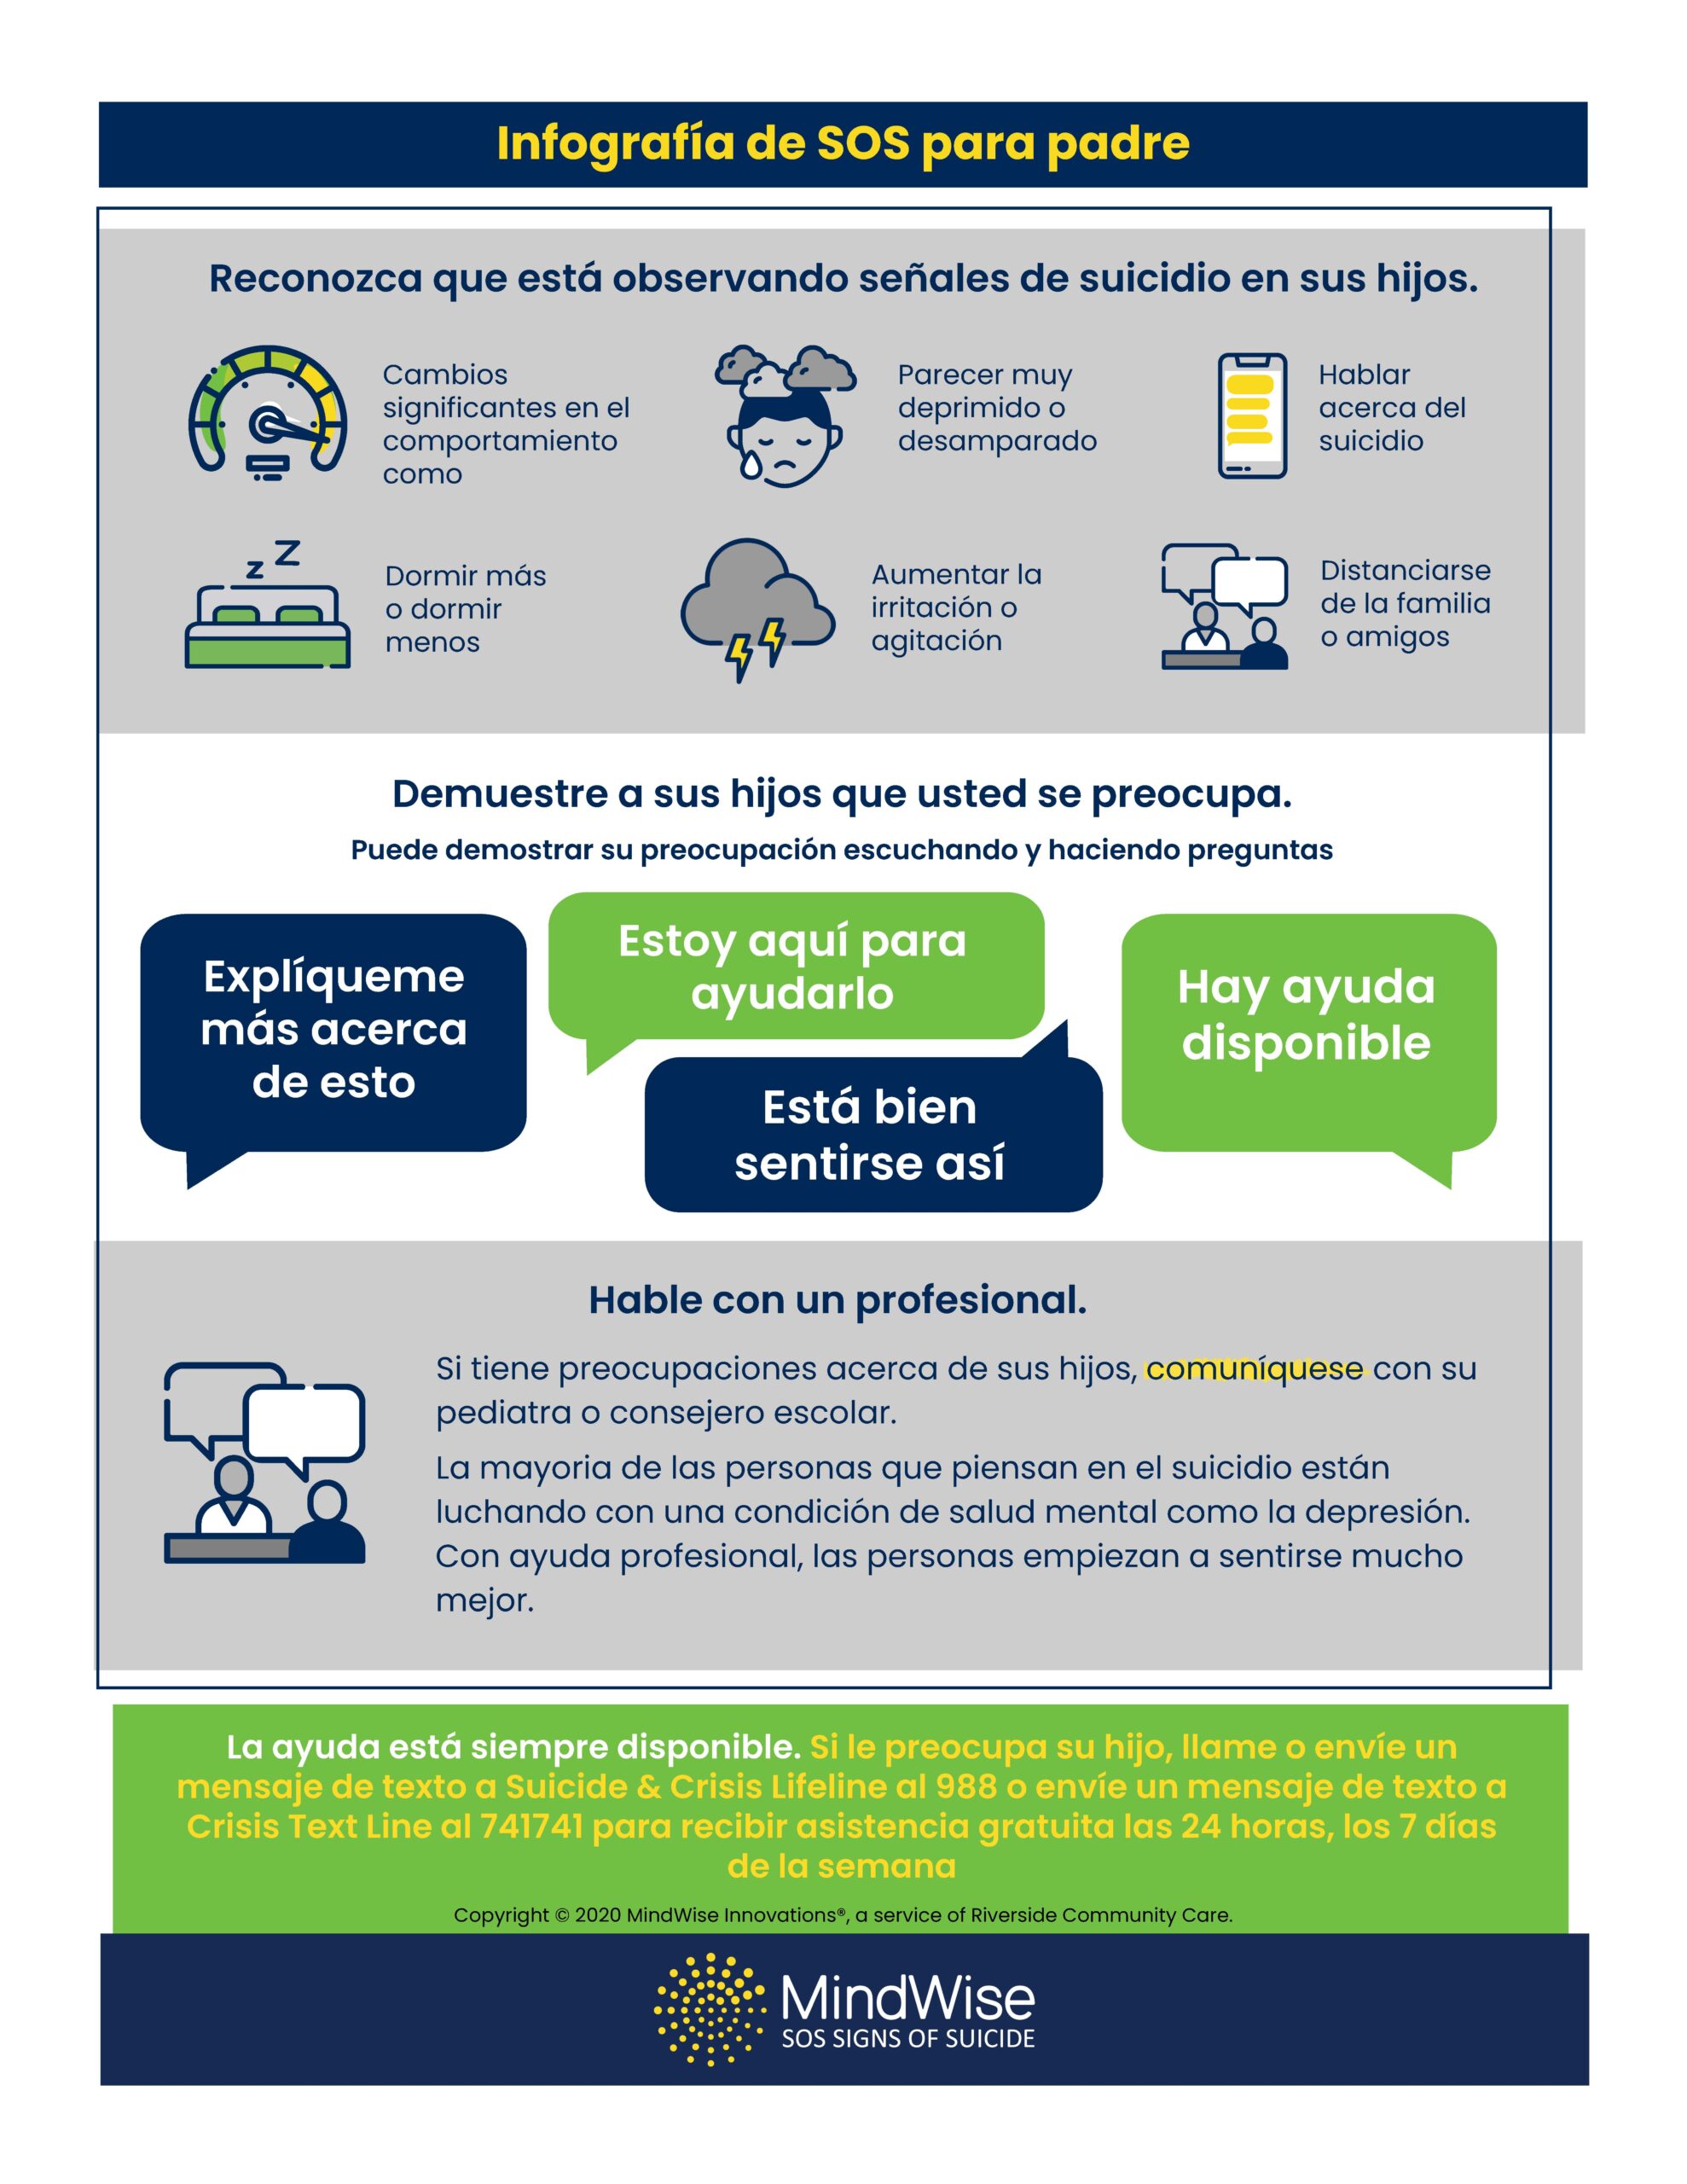 SOS インフォグラフィック (スペイン語) - 両親 2022